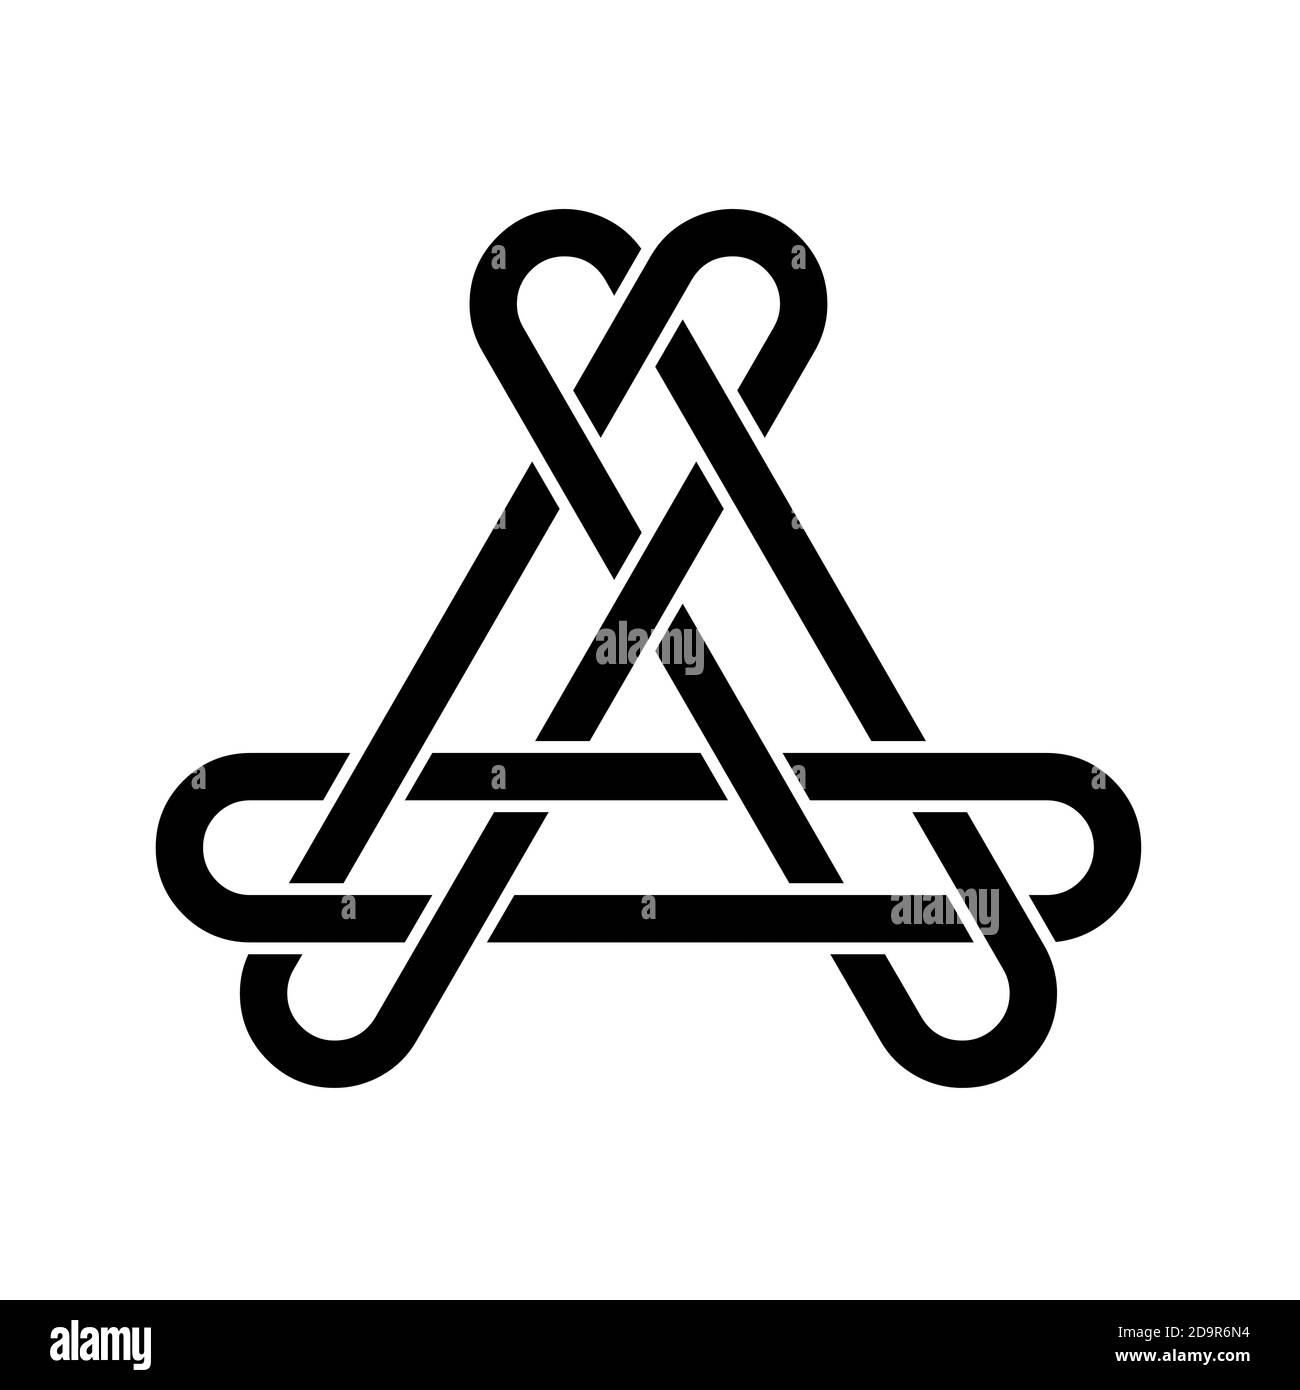 Solomon's knot symbol icon Stock Photo